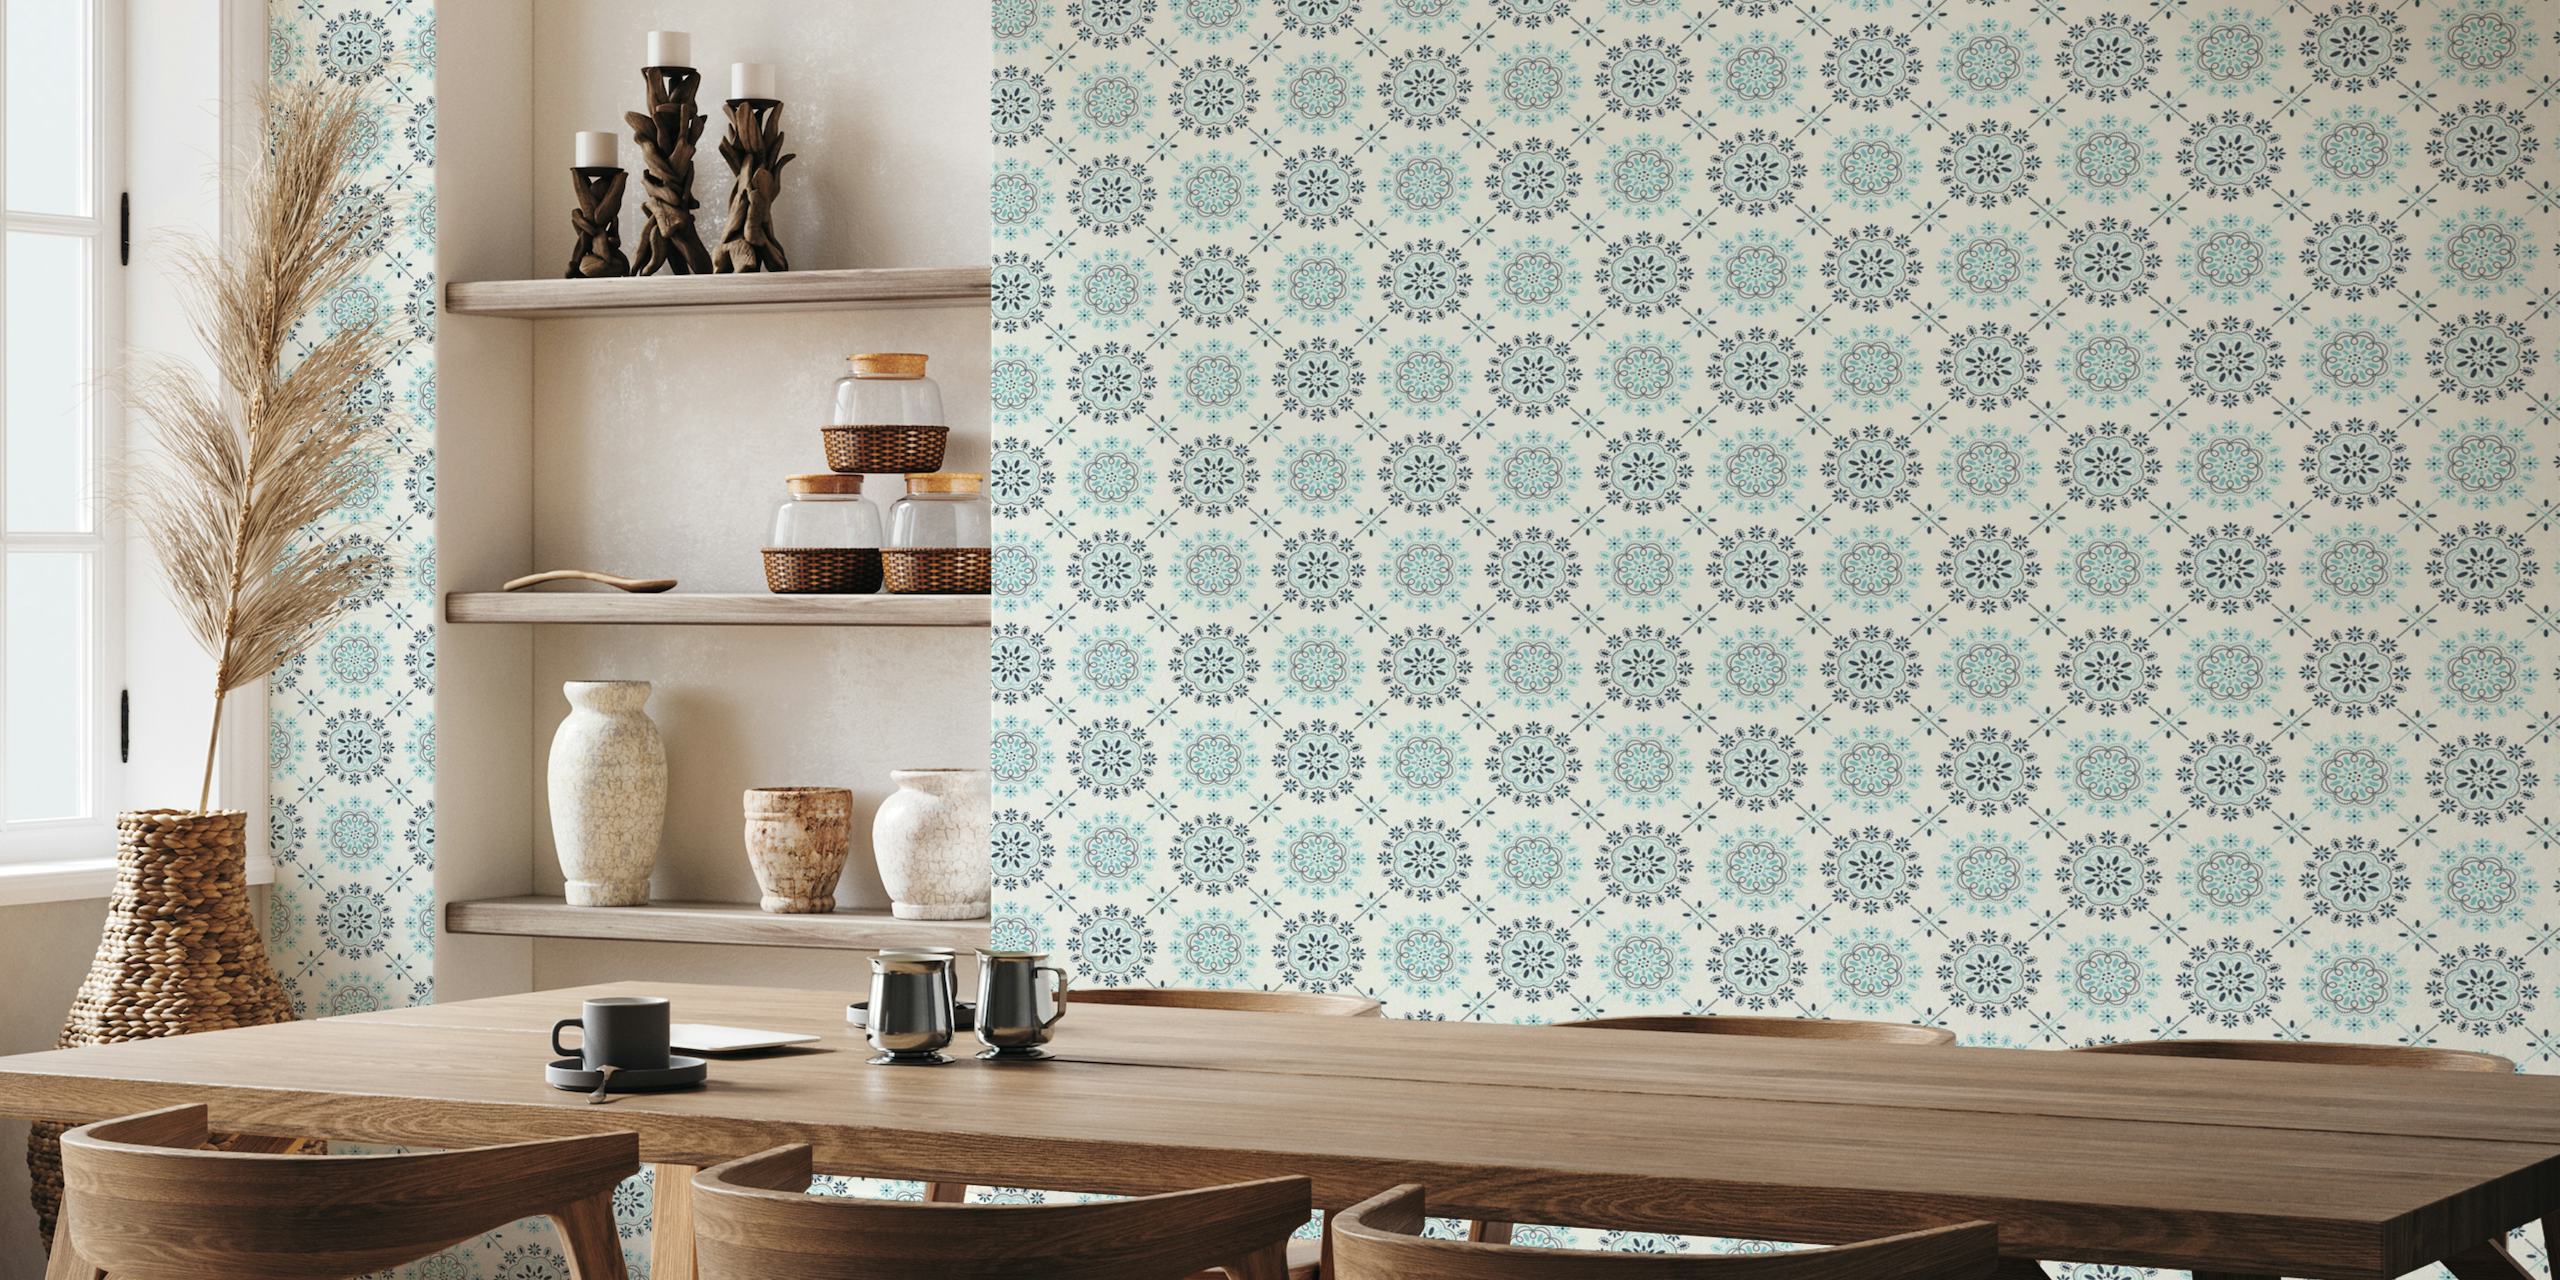 Blue and white kitchen tile wallpaper